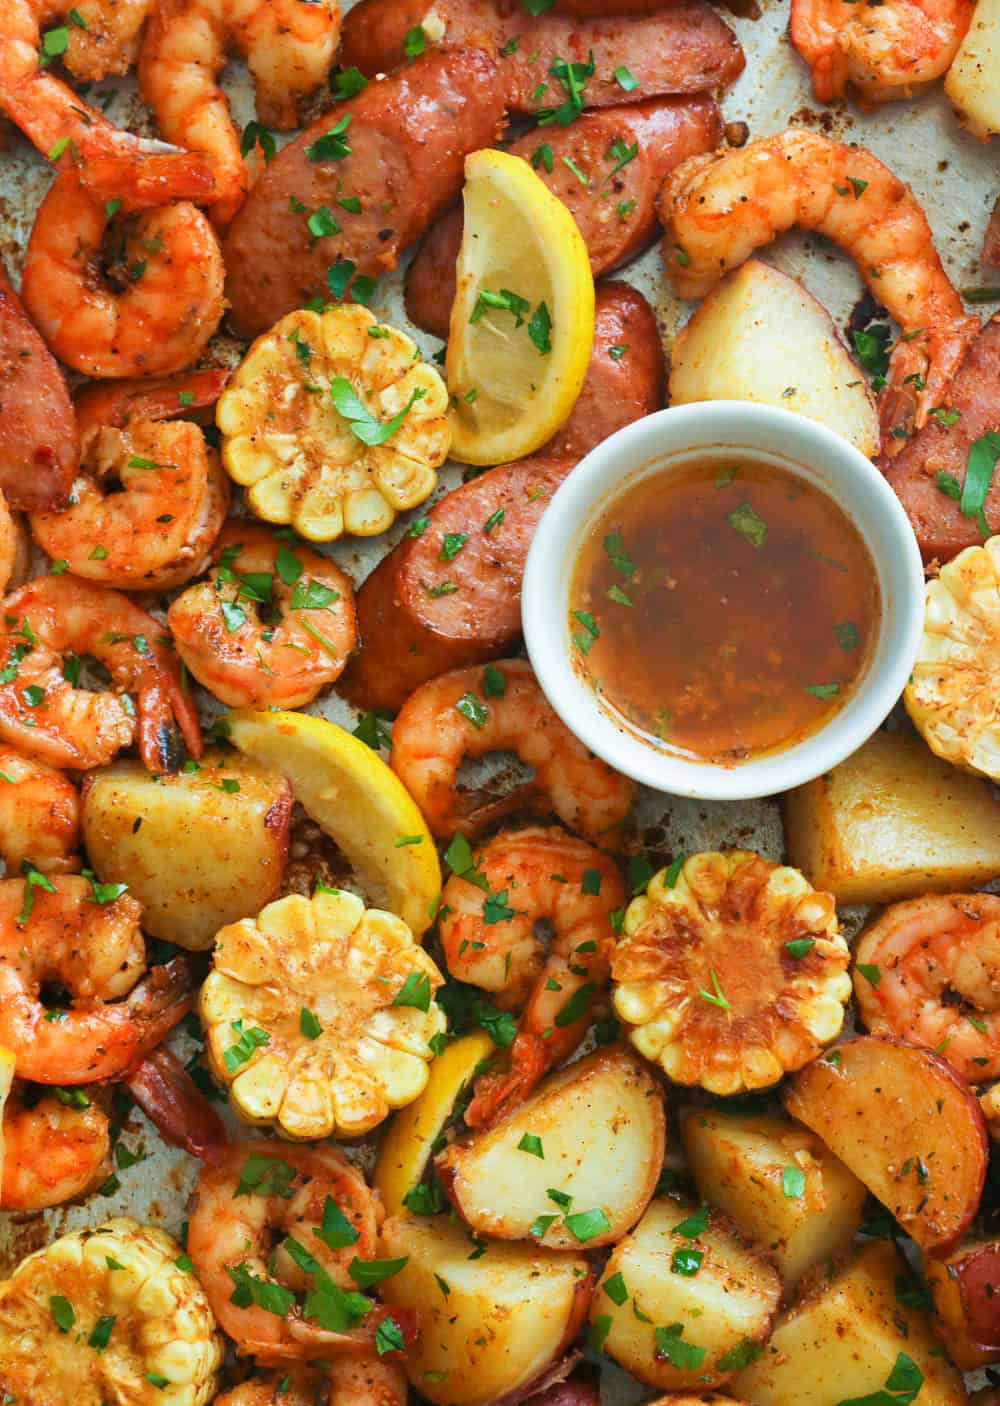 How to cook a shrimp boil